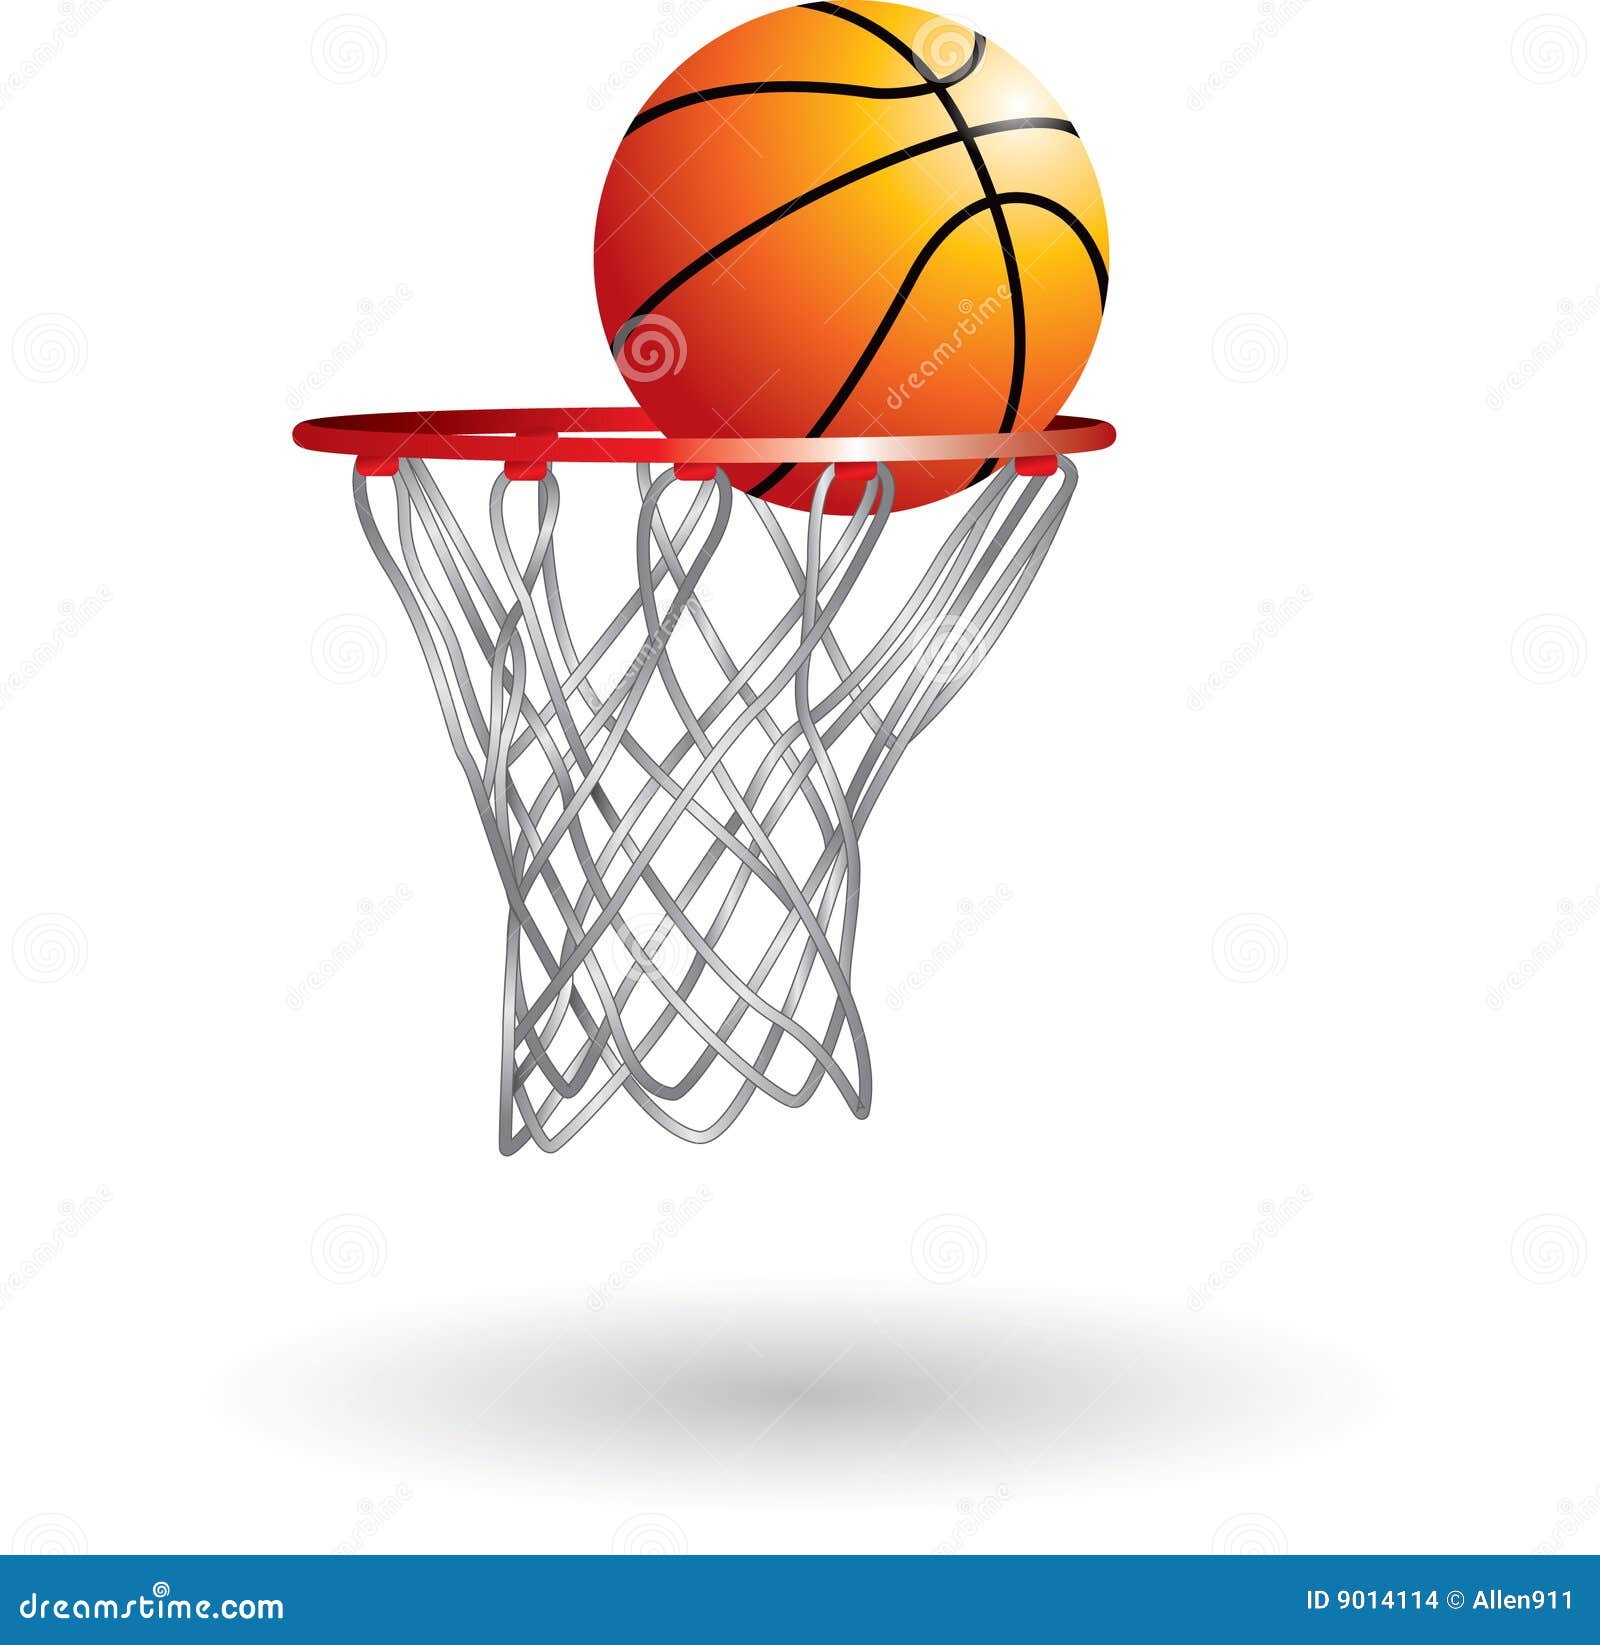 basketball going into net